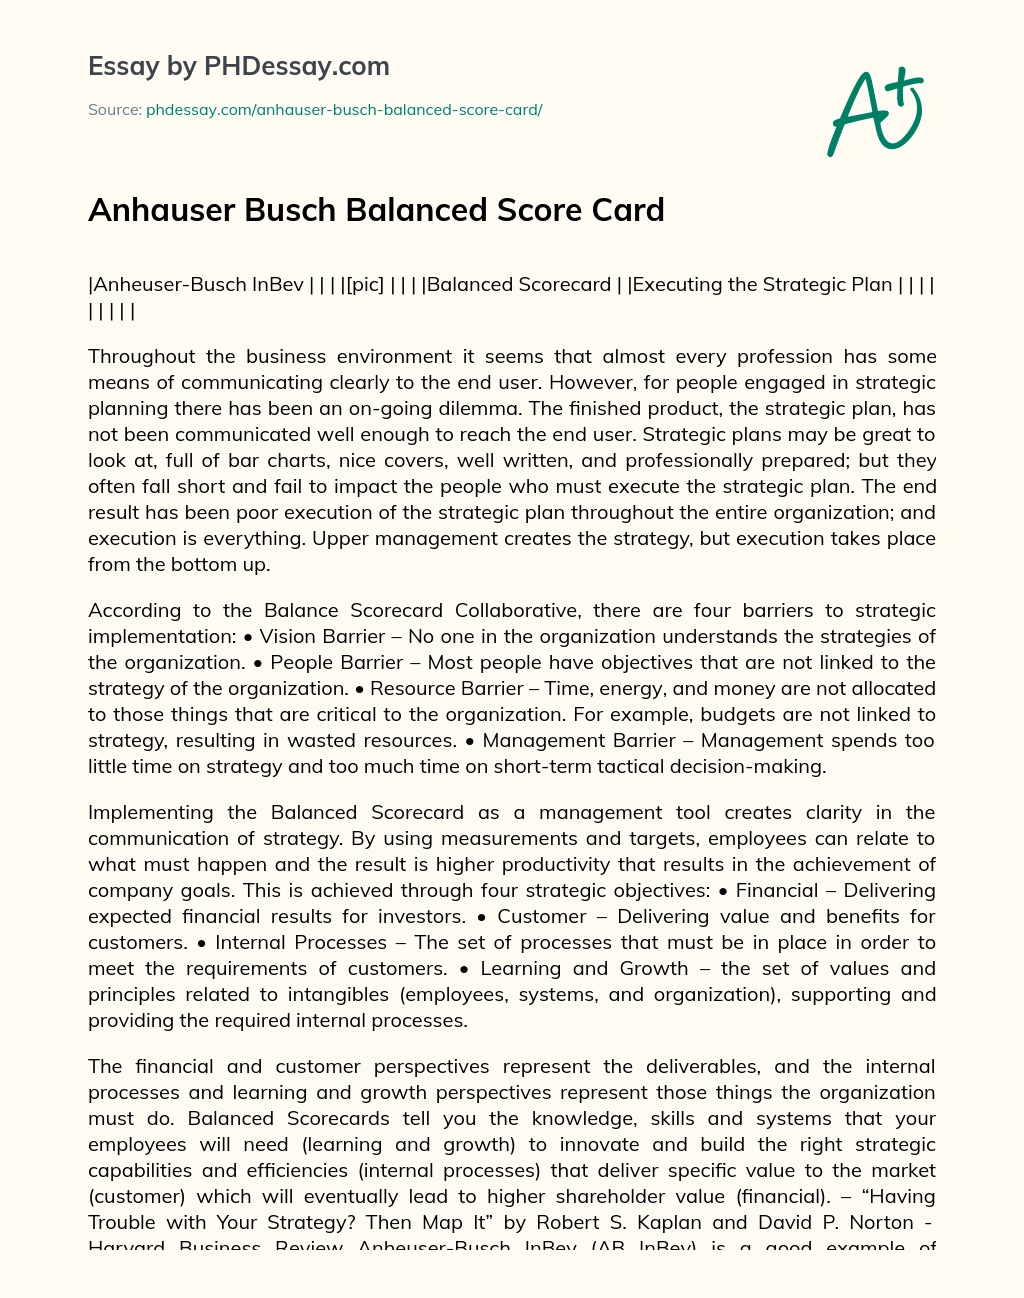 Anhauser Busch Balanced Score Card essay